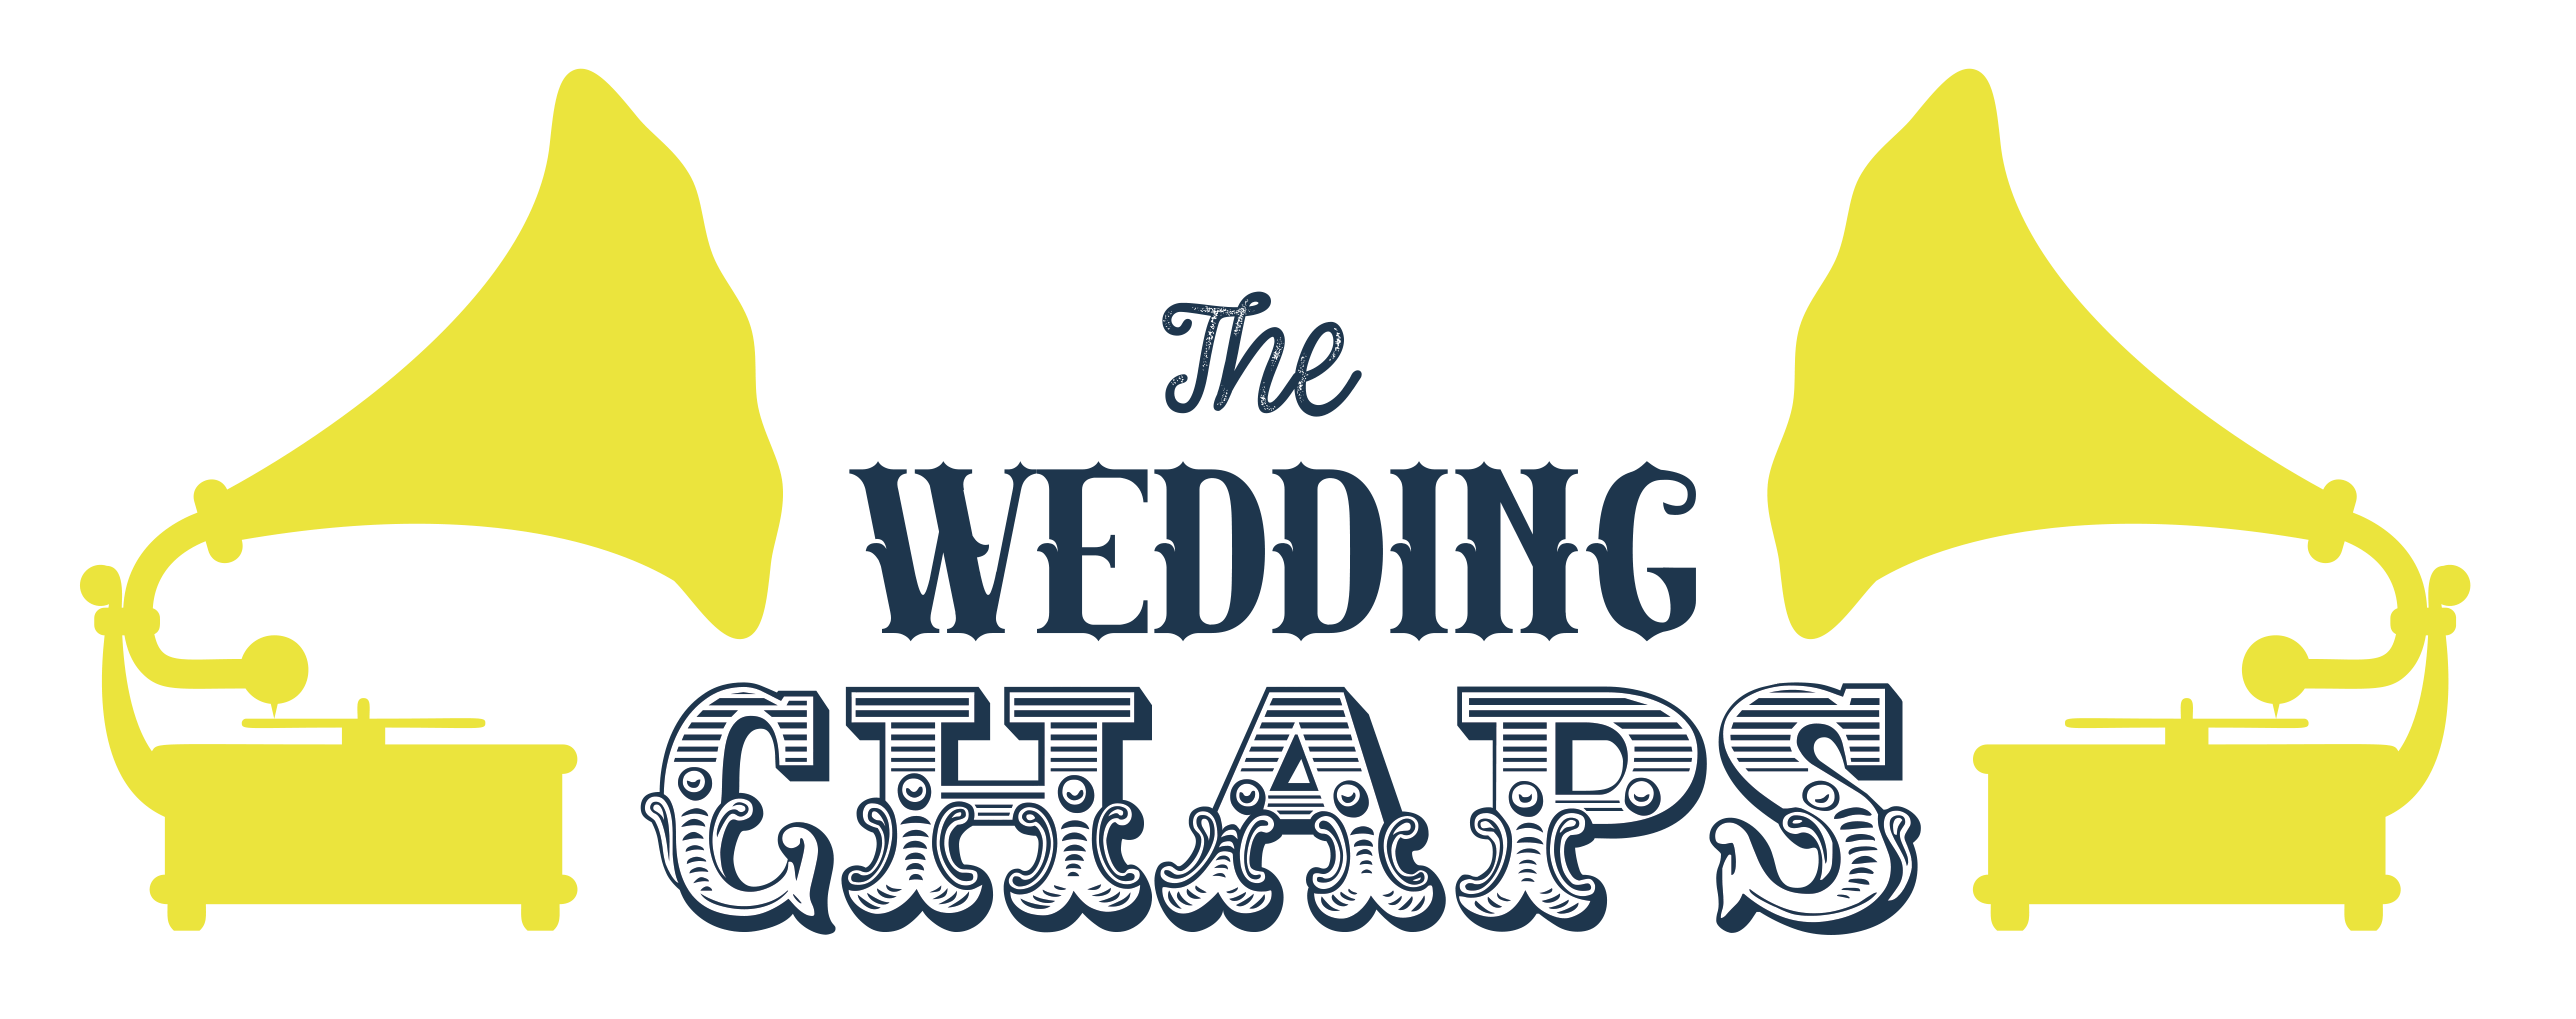 Chaps Logo - The Wedding Chaps Collective of Kent Wedding Expert DJs